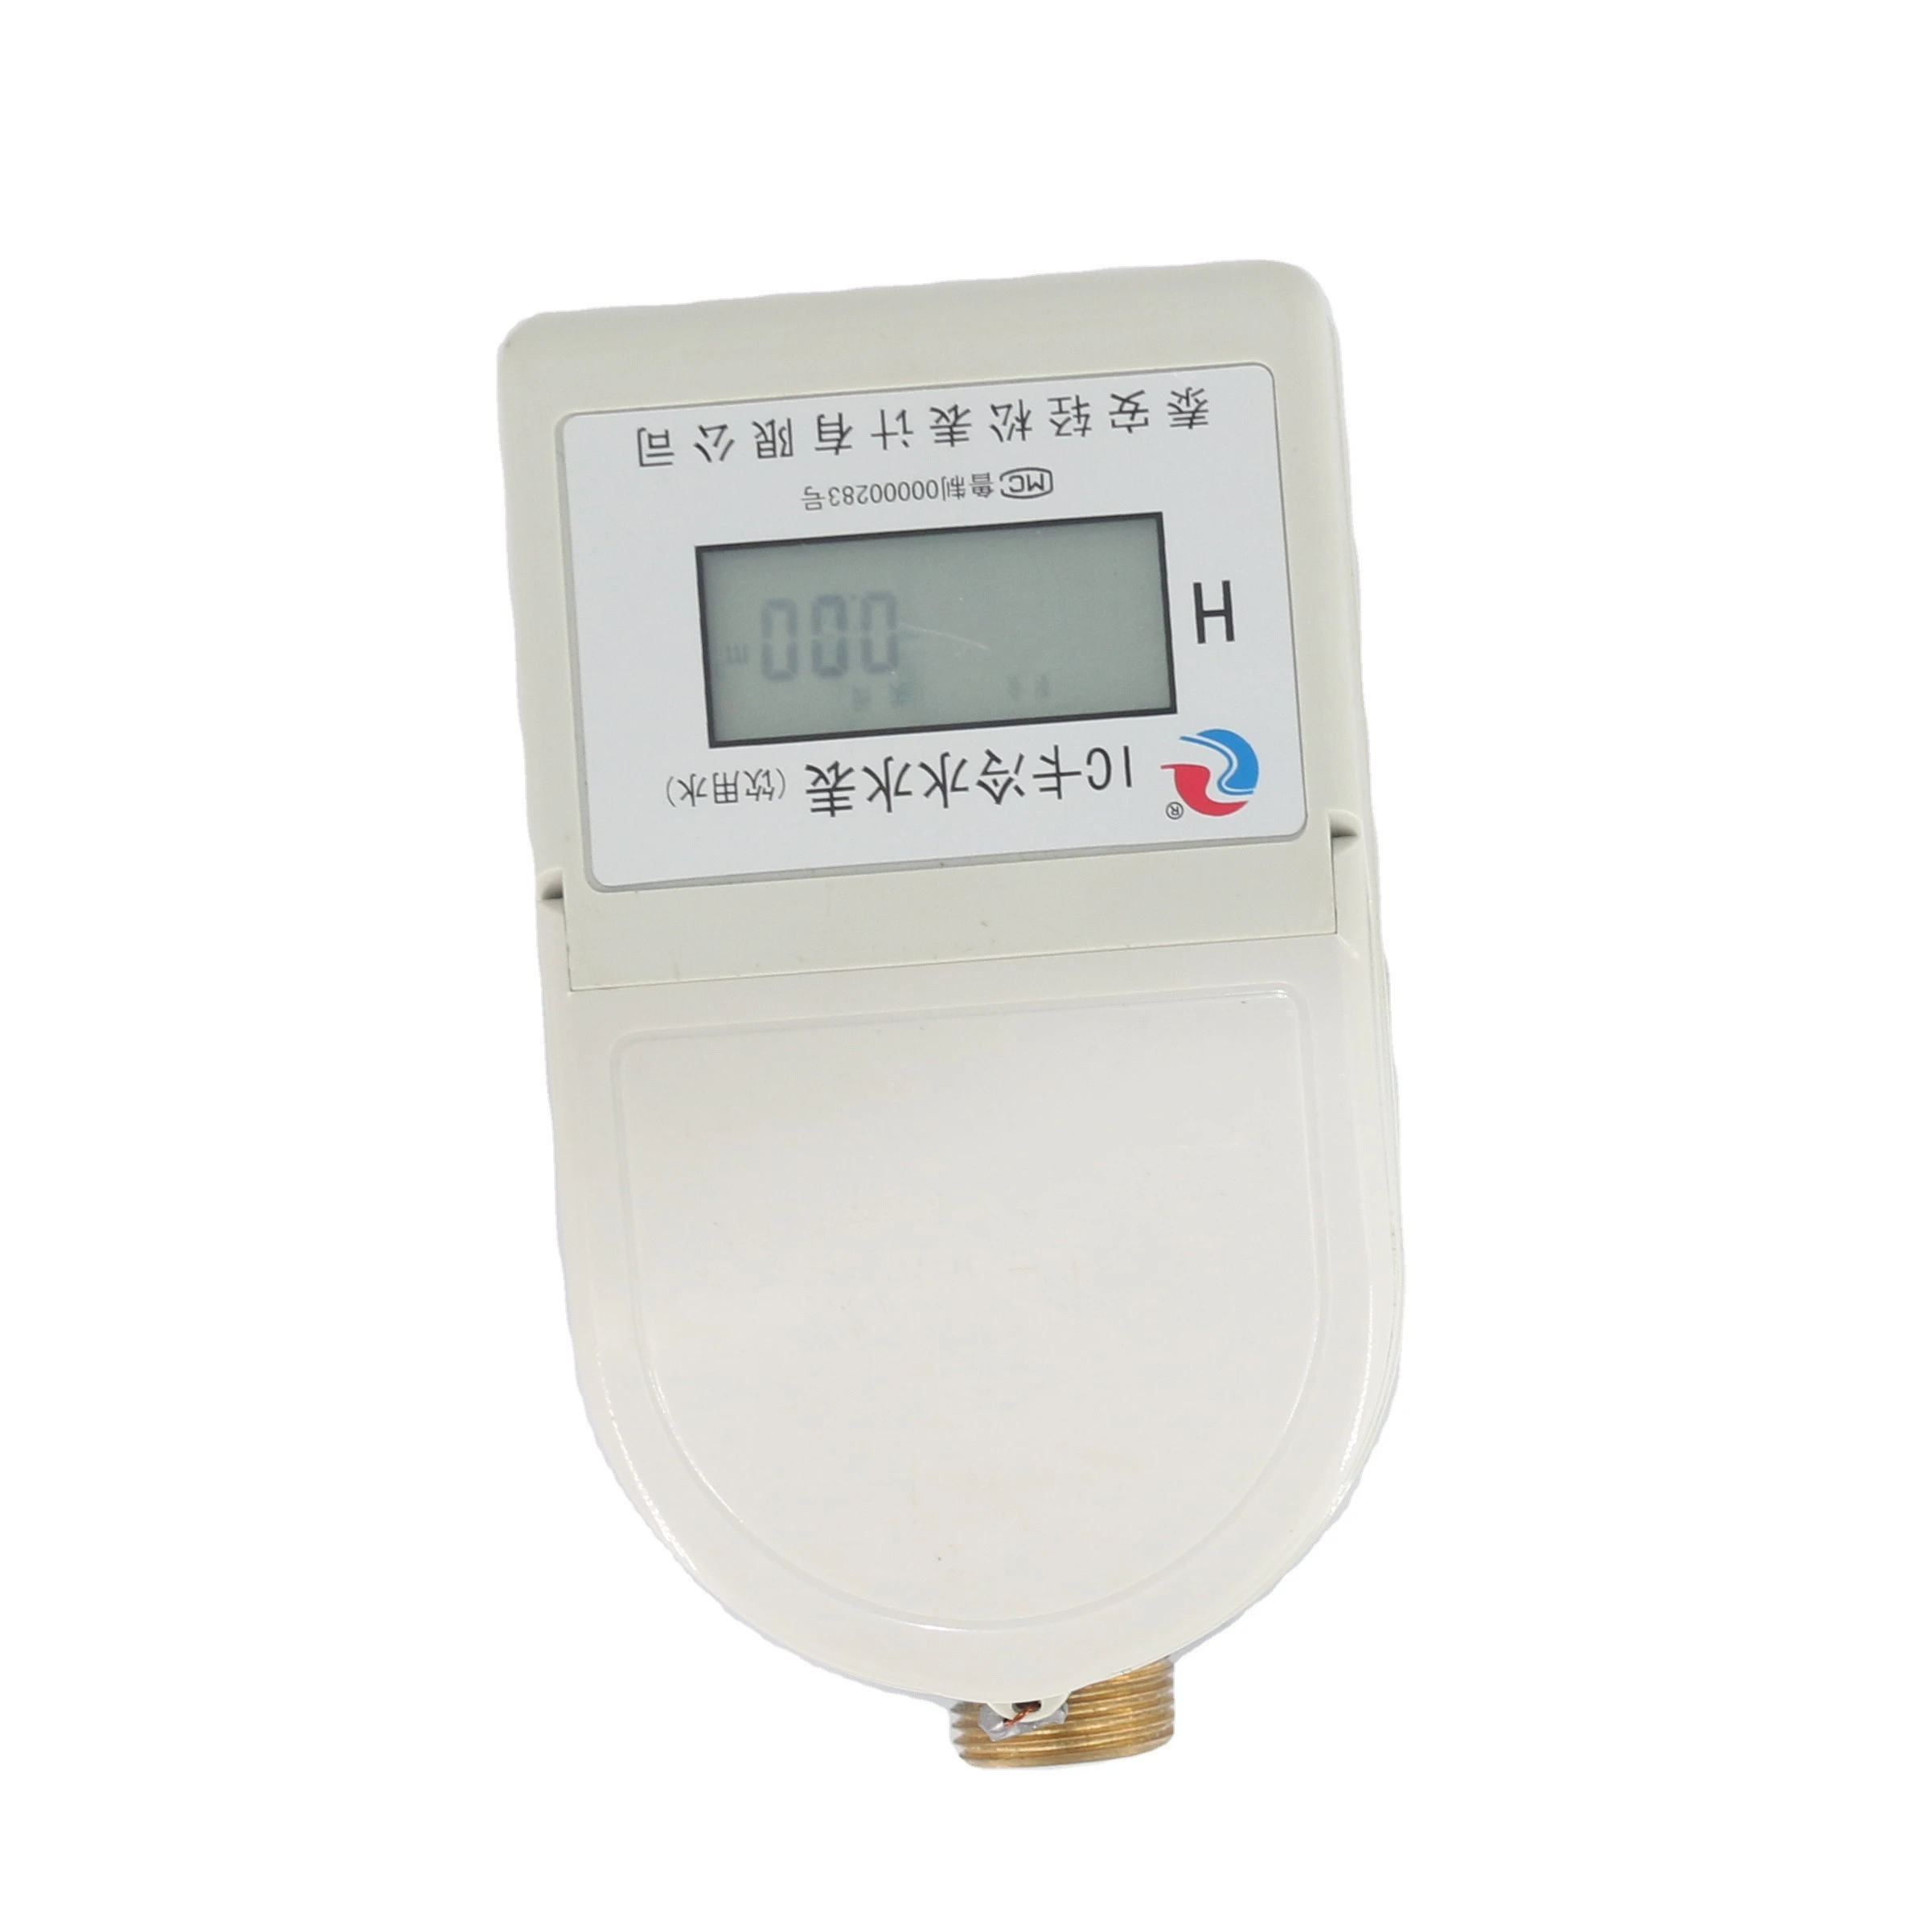 Smart Horizonal radio frequency IC card prepaid water meter price